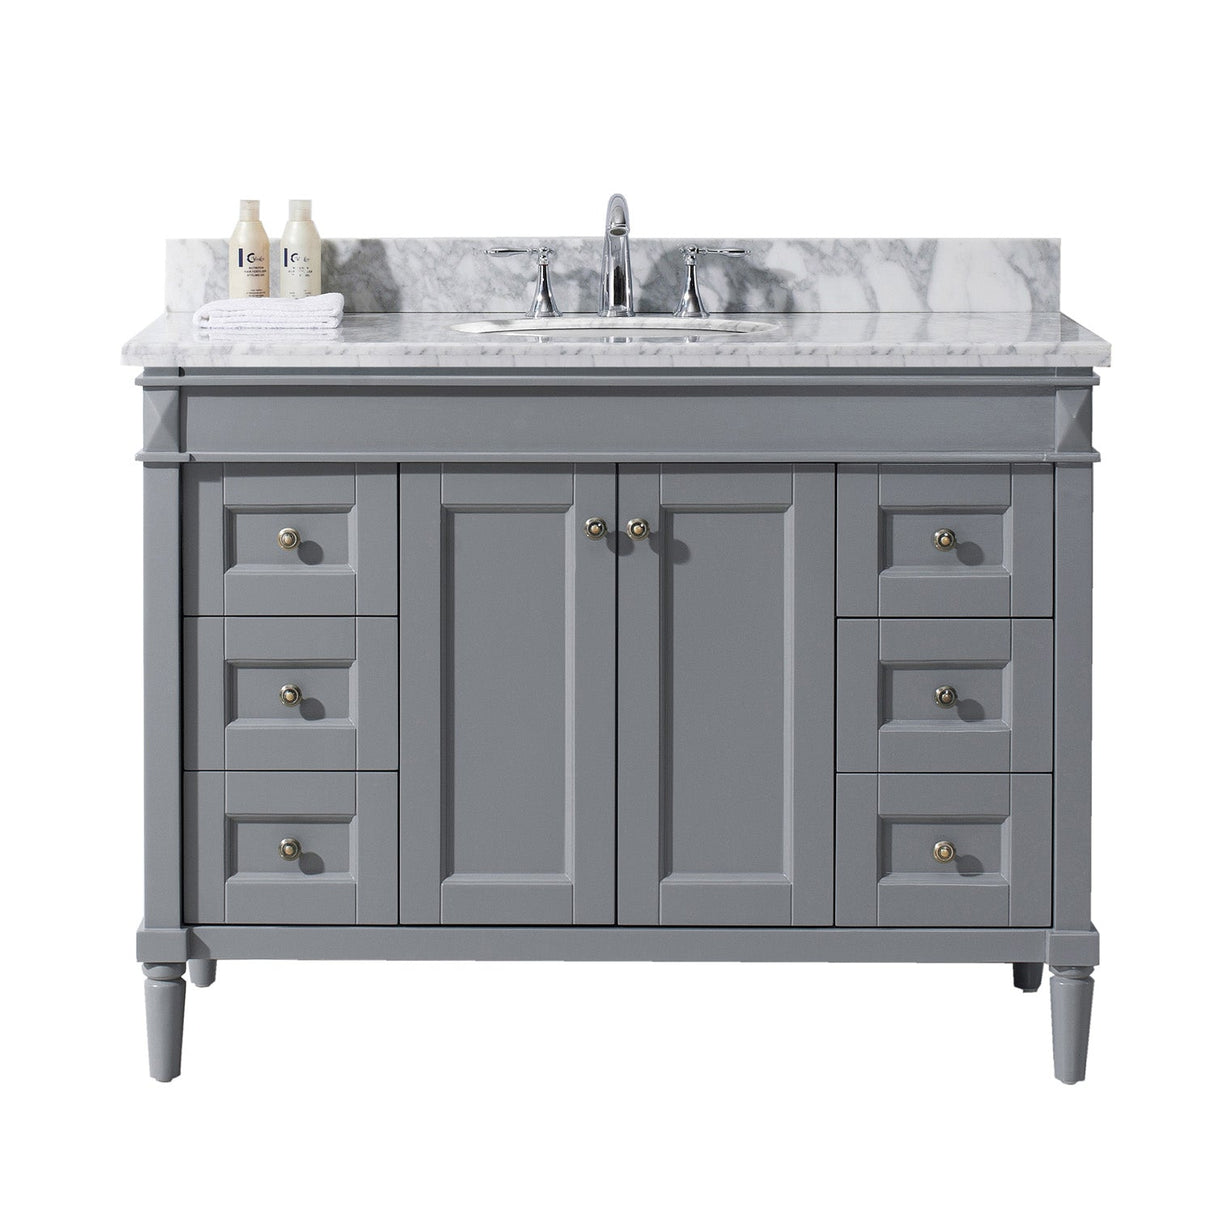 Virtu USA Tiffany 48" Single Bath Vanity in Grey with Marble Top and Round Sink - Luxe Bathroom Vanities Luxury Bathroom Fixtures Bathroom Furniture